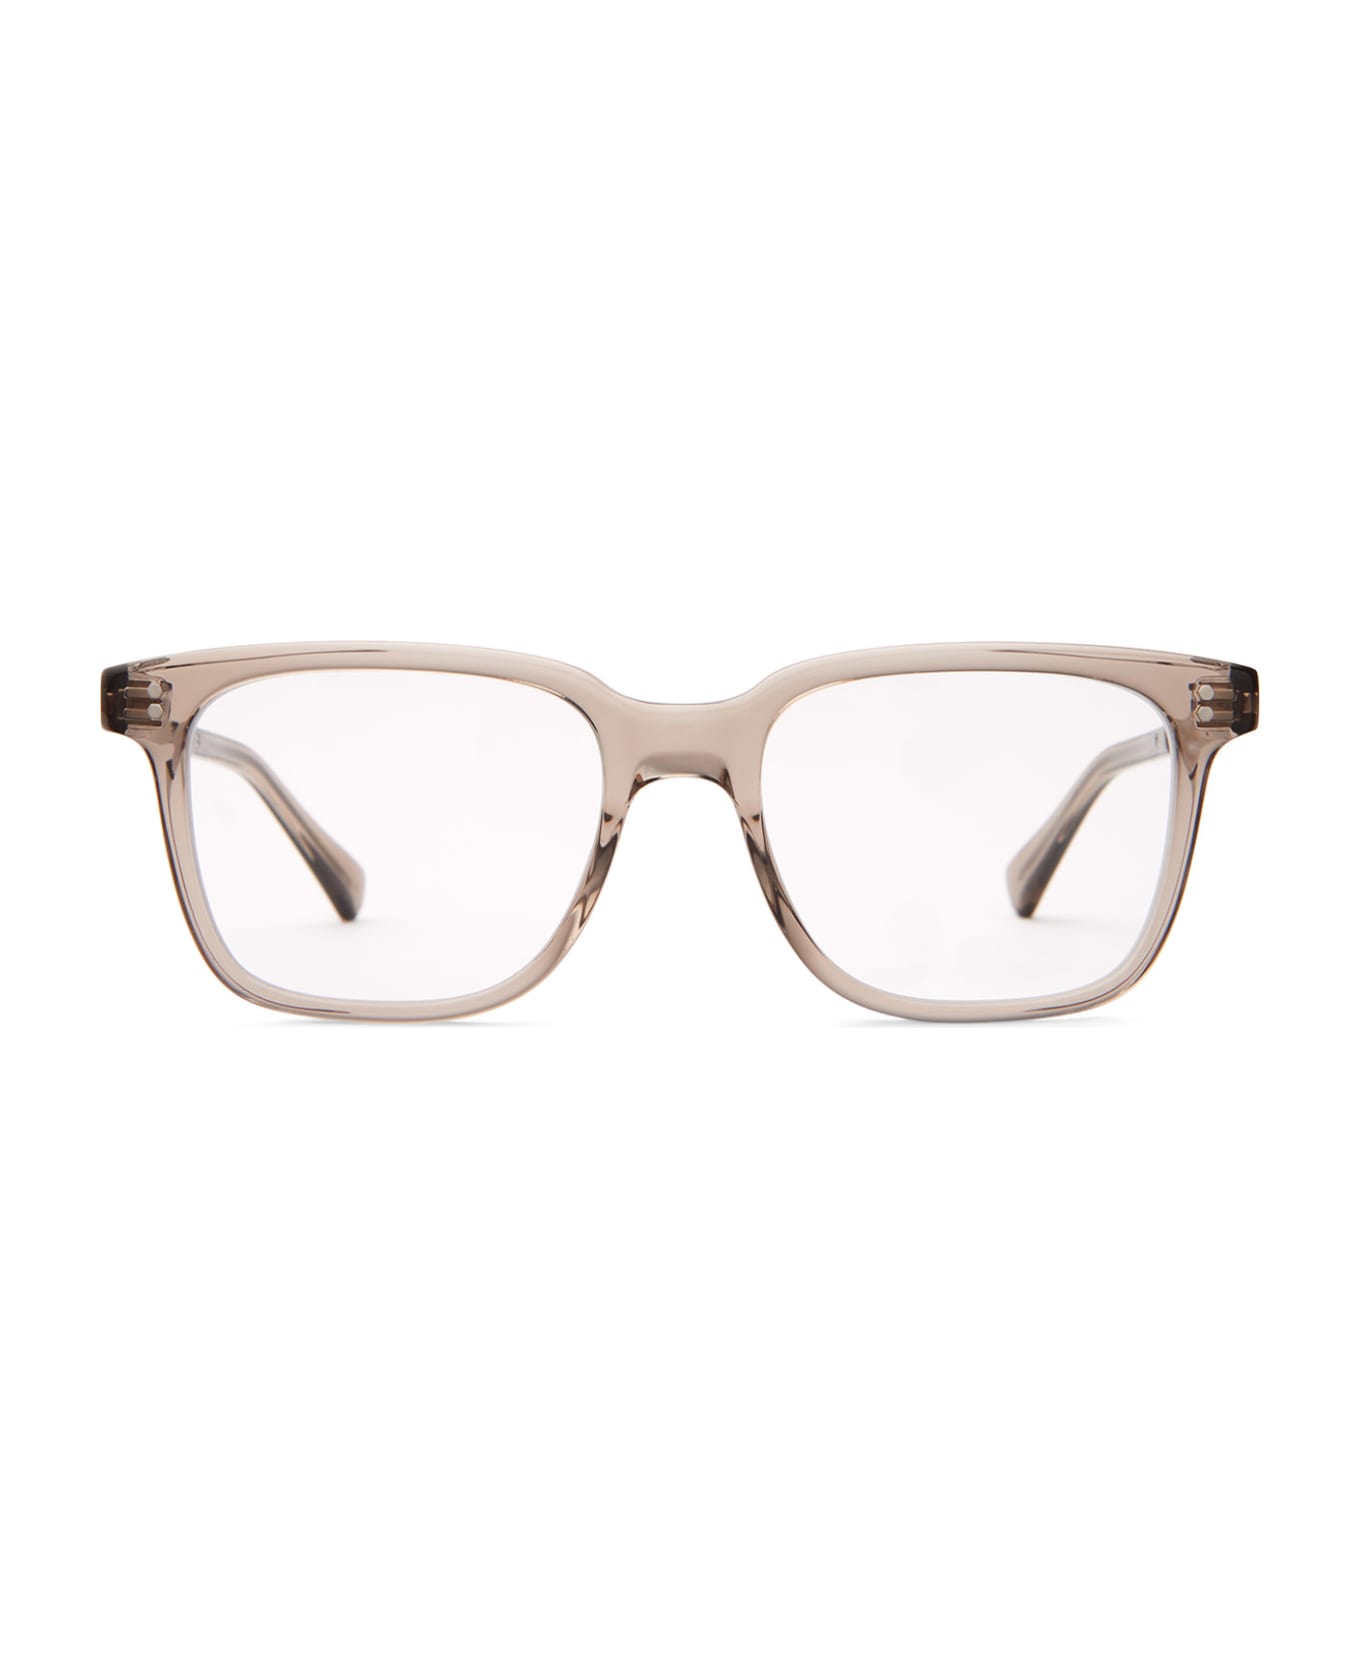 Mr. Leight Lautner C Grey Crystal-pewter Glasses - Grey Crystal-Pewter アイウェア